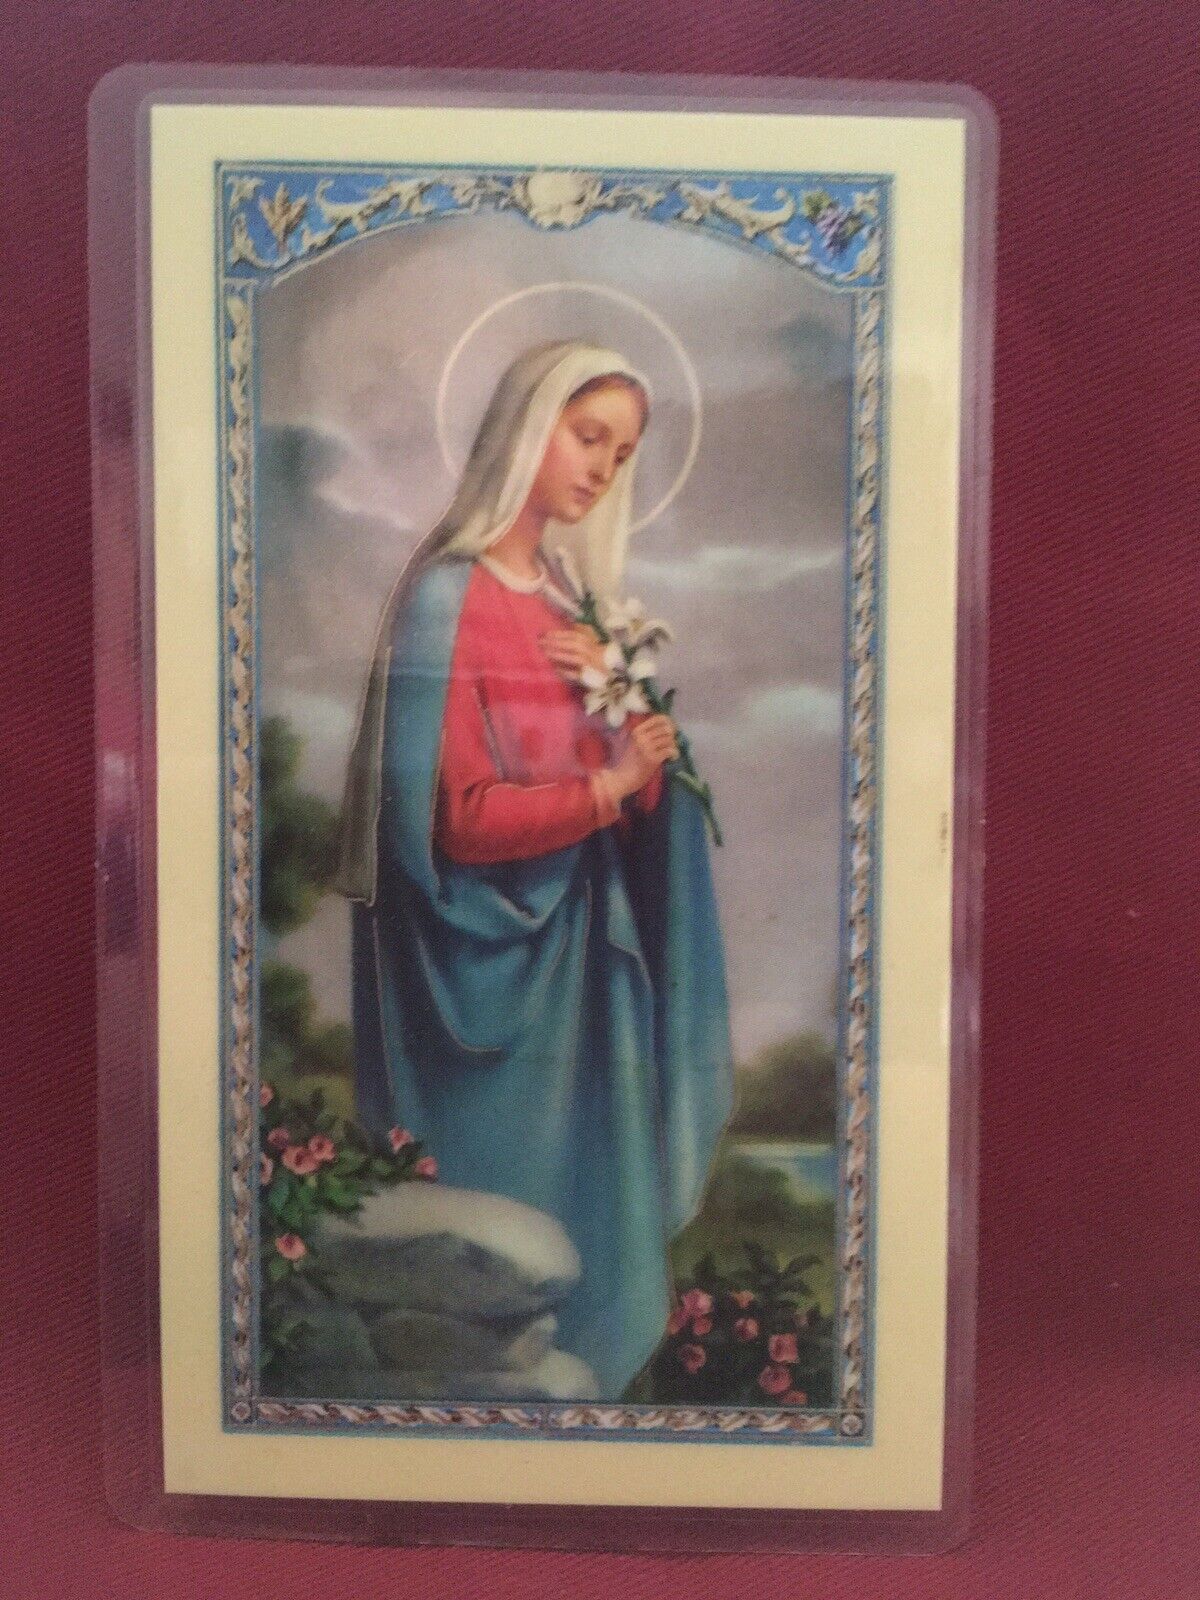 Bonella Holy Card by W. J. Hirten Co. Courtship Prayer